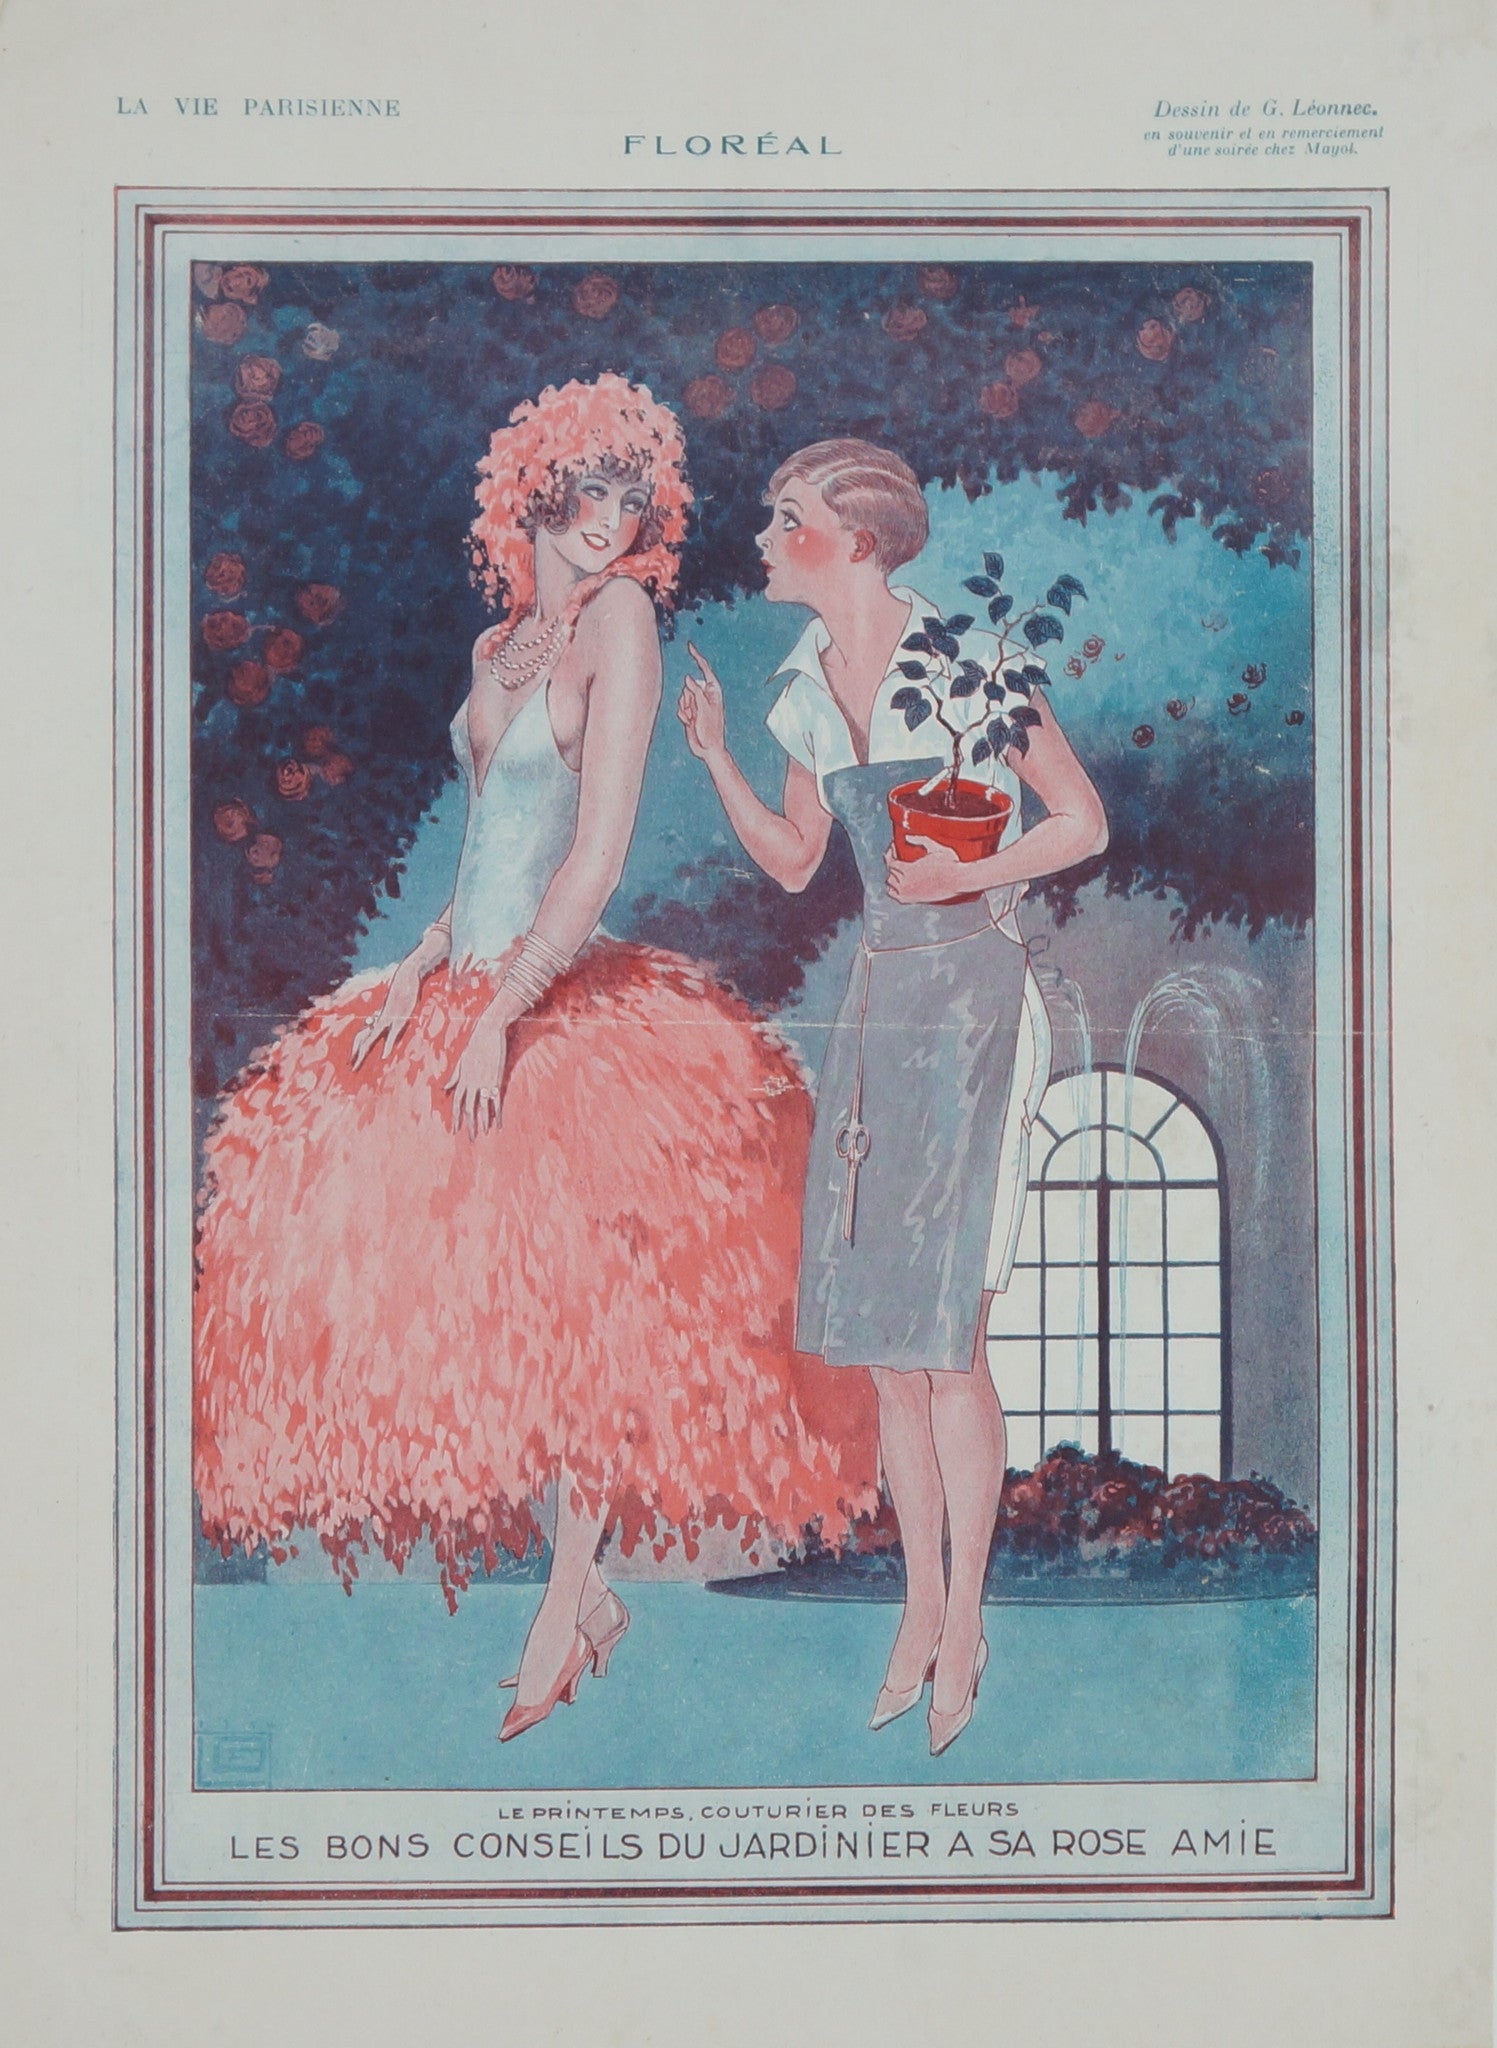 La Revue Blanche - Magazine Cover - Vintage Advertising Poster Tote Bag by  Studio Grafiikka - Fine Art America